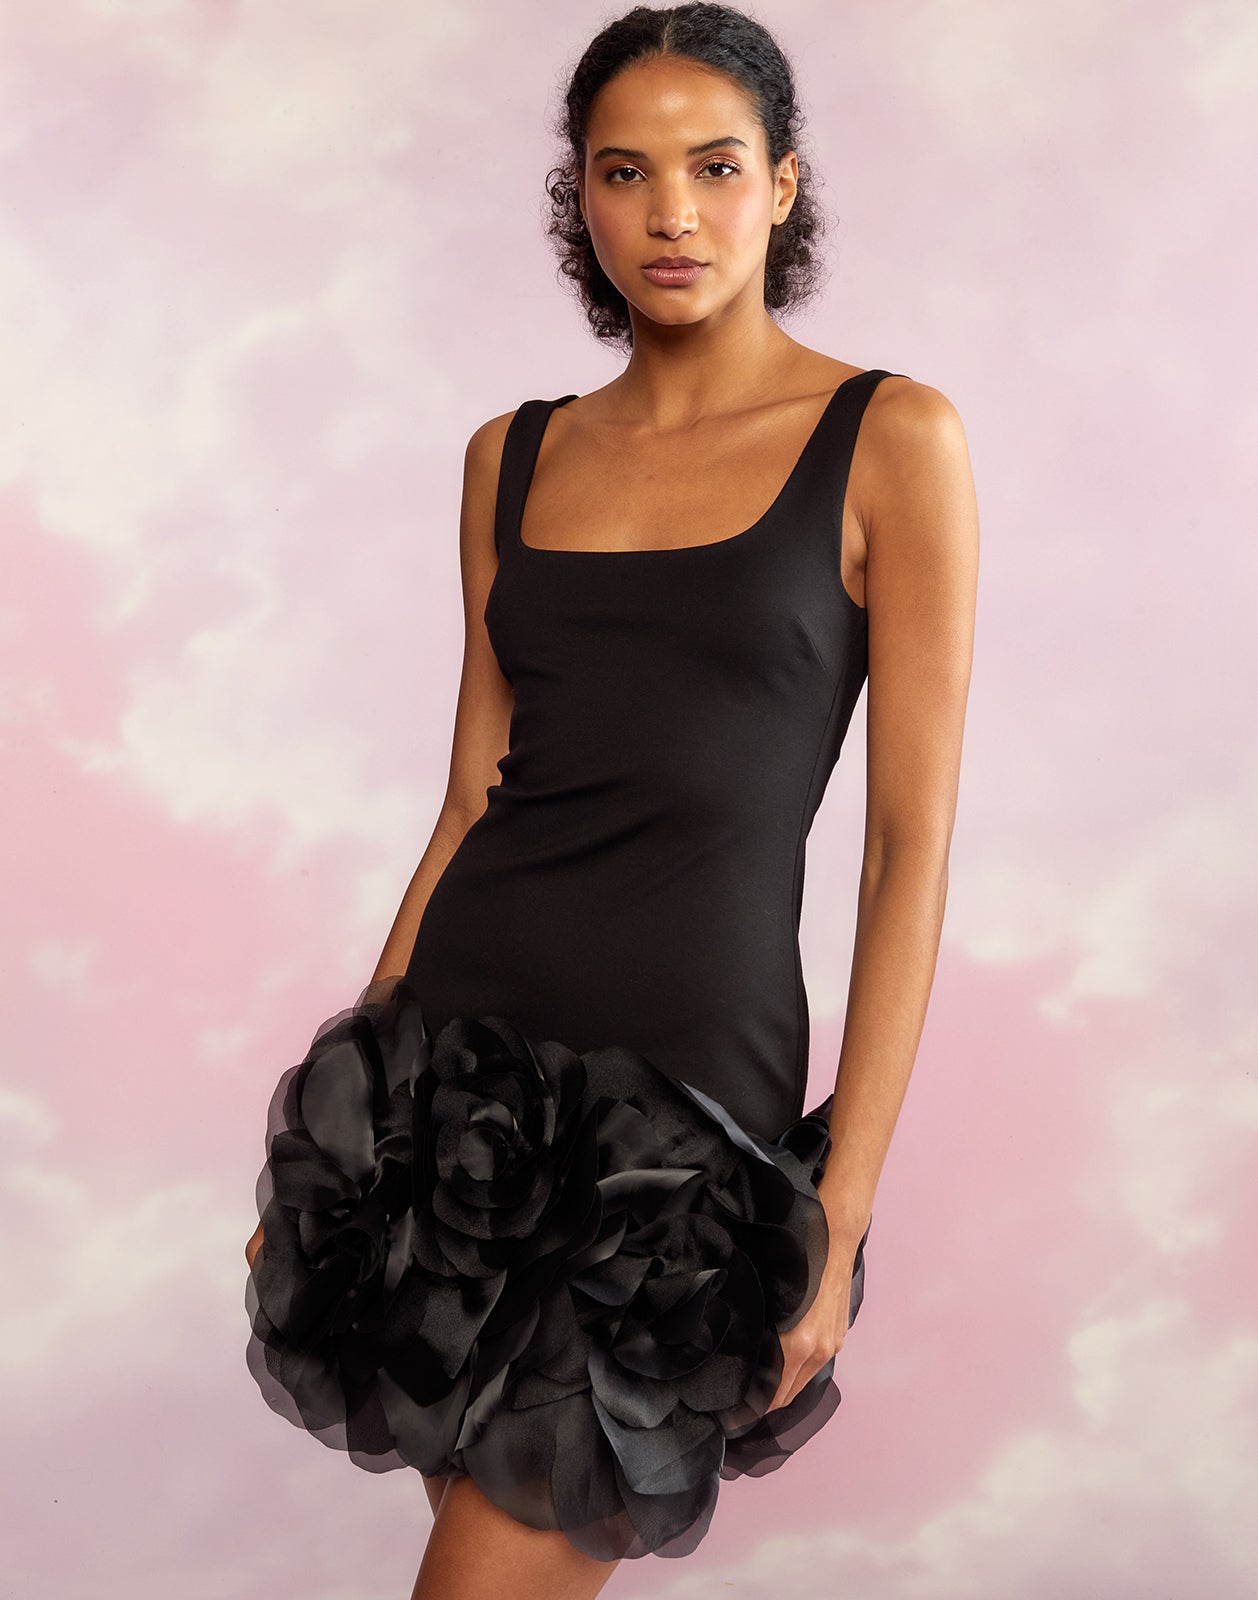 Little Black Dresses - Mini, Midi & Maxi Classic LBDs